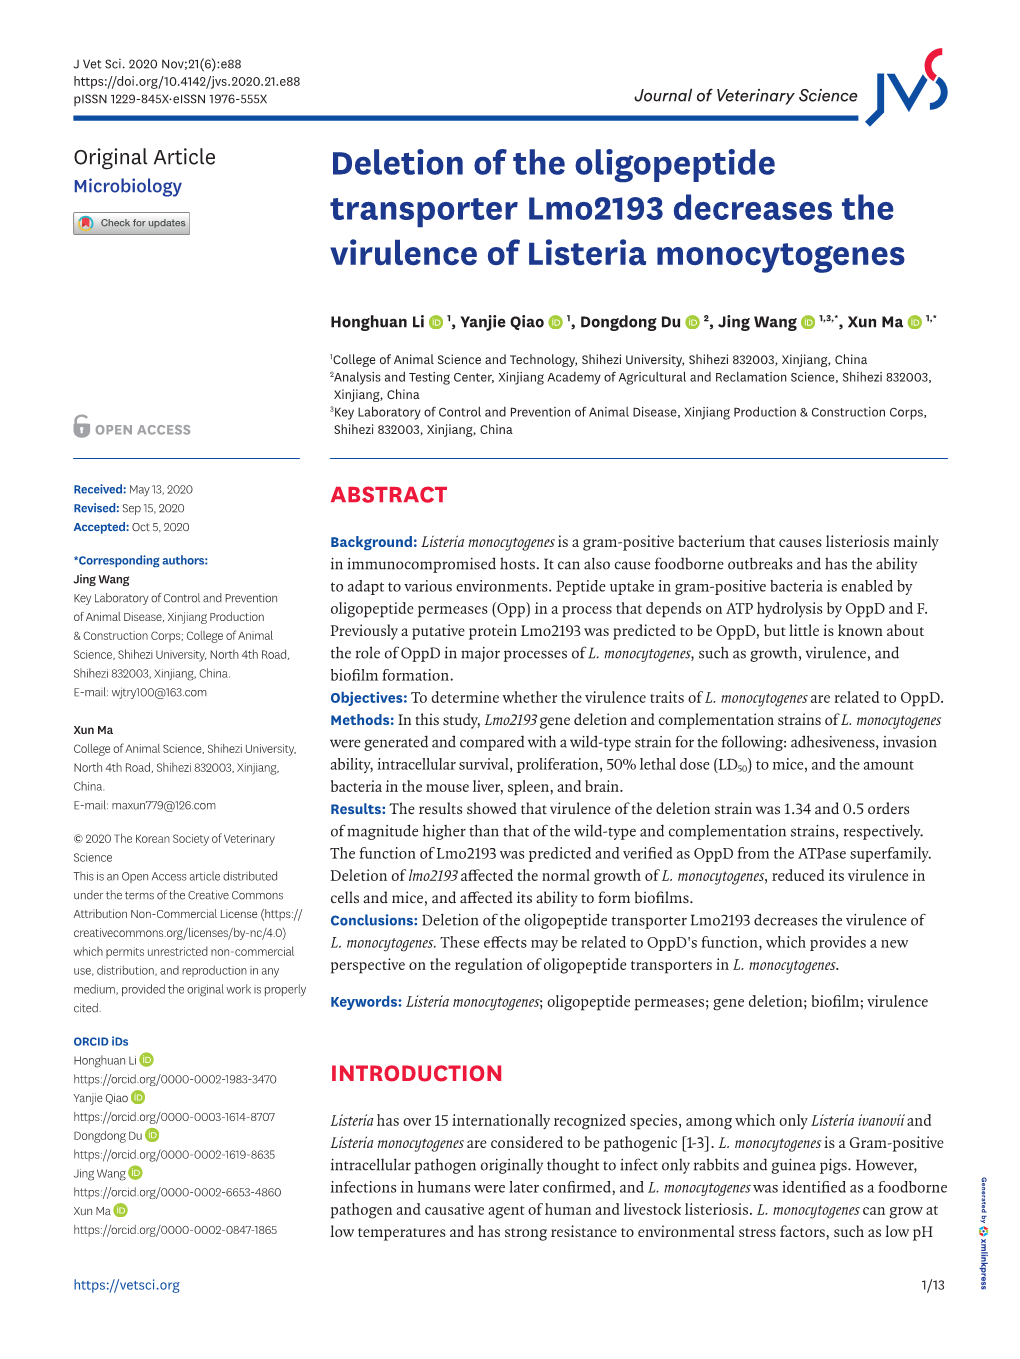 Deletion of the Oligopeptide Transporter Lmo2193 Decreases the Virulence of Listeria Monocytogenes